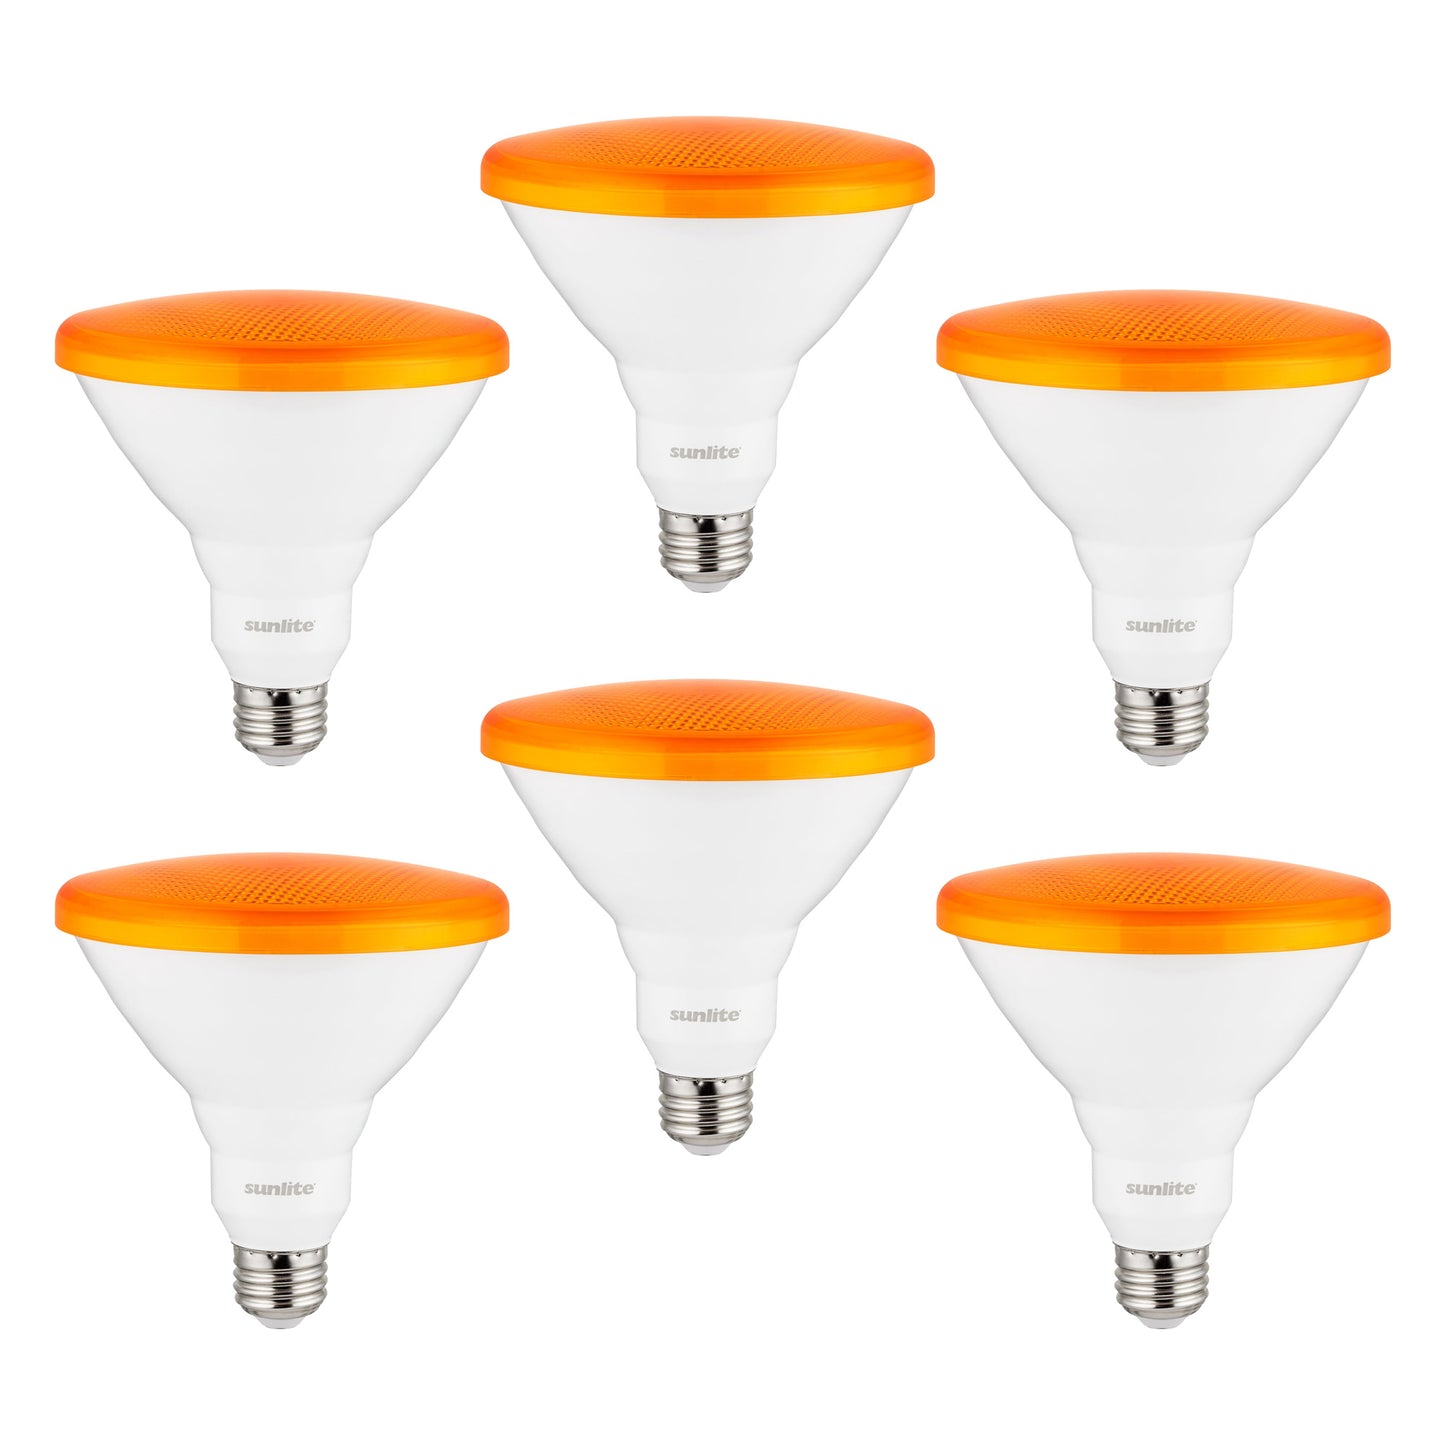 Sunlite LED PAR38 Orange Floodlight Bulb, 8W (25W Equivalent), Medium (E26) Base, Indoor, Outdoor, Wet Location, Turtle Safe and Wildlife Friendly, 25,000 Hour Lifespan, UL Listed